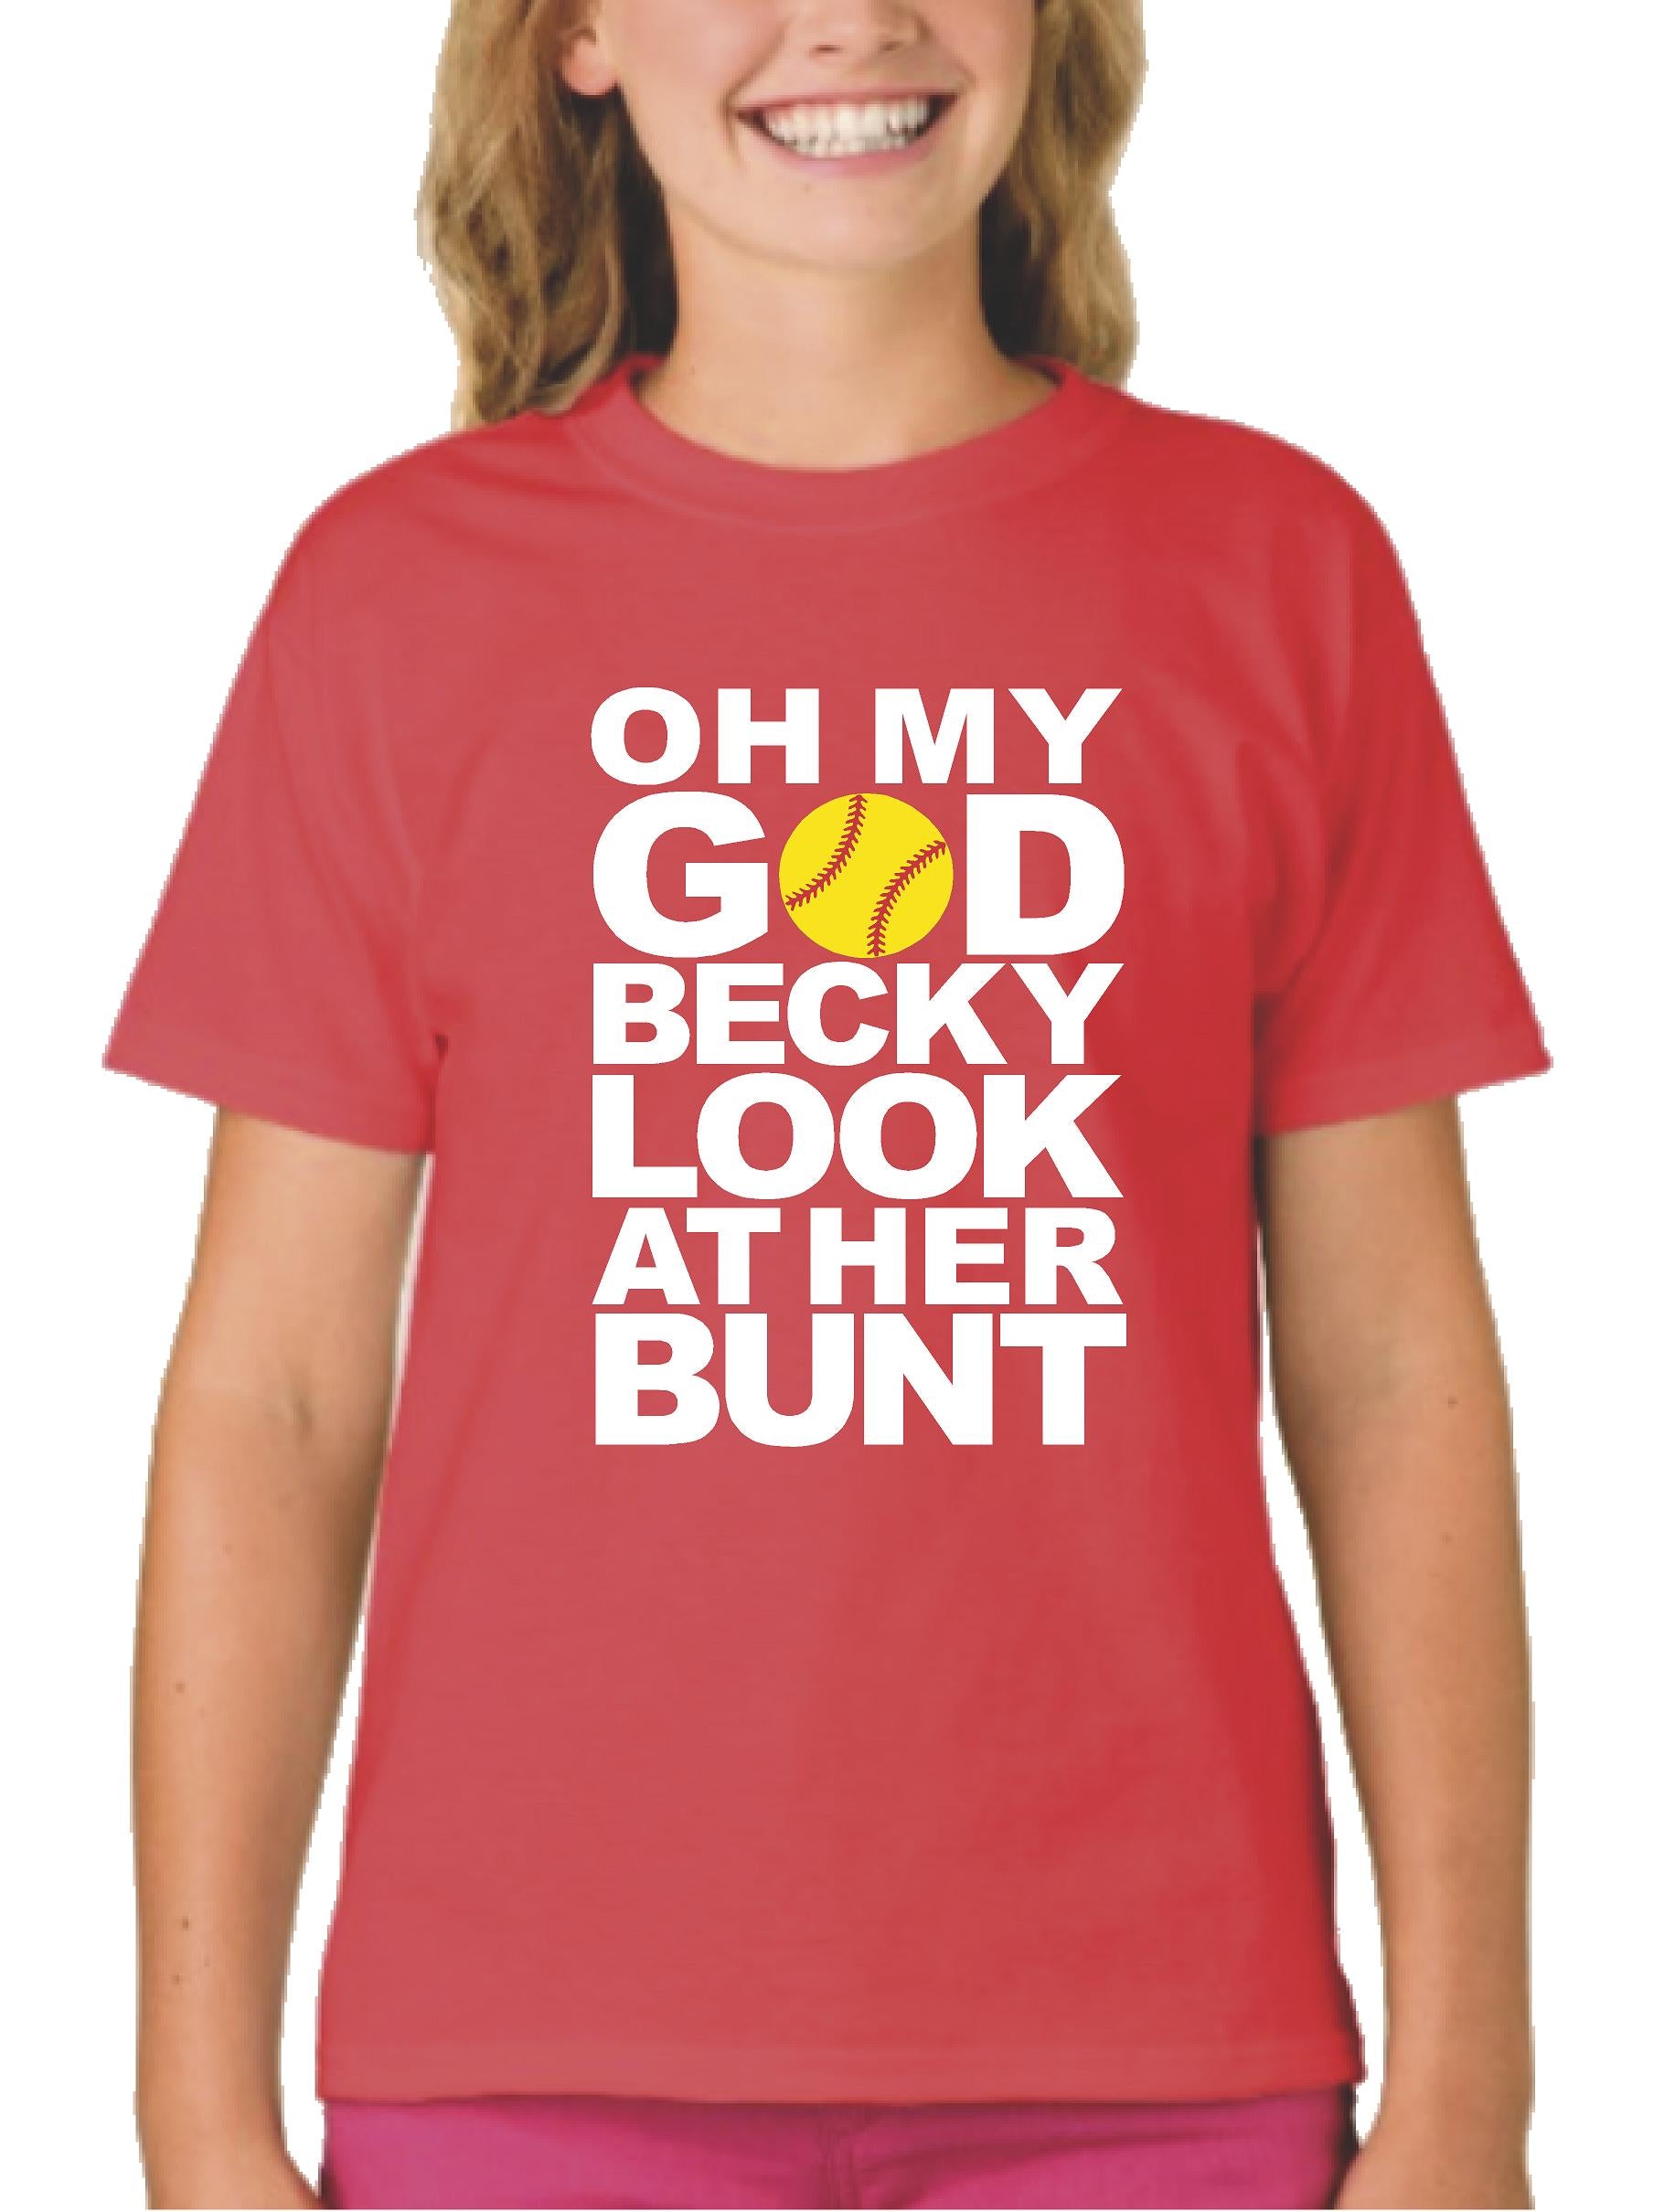 girls softball shirts designs